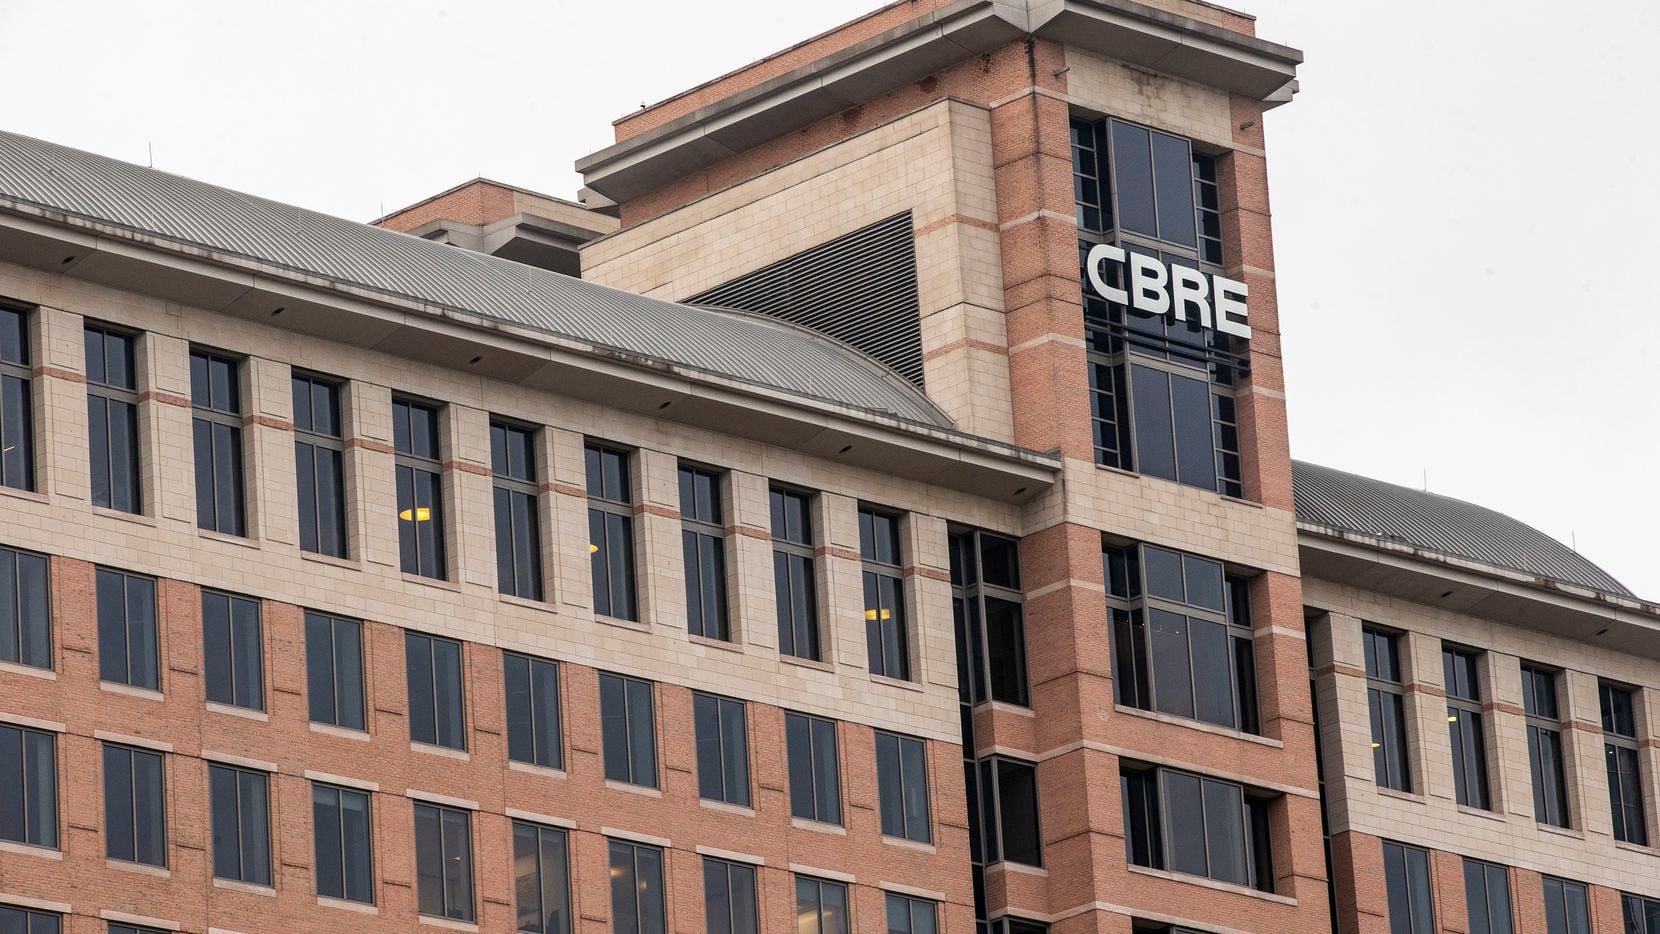 CBRE owns Dallas-based developer Trammell Crow Co.